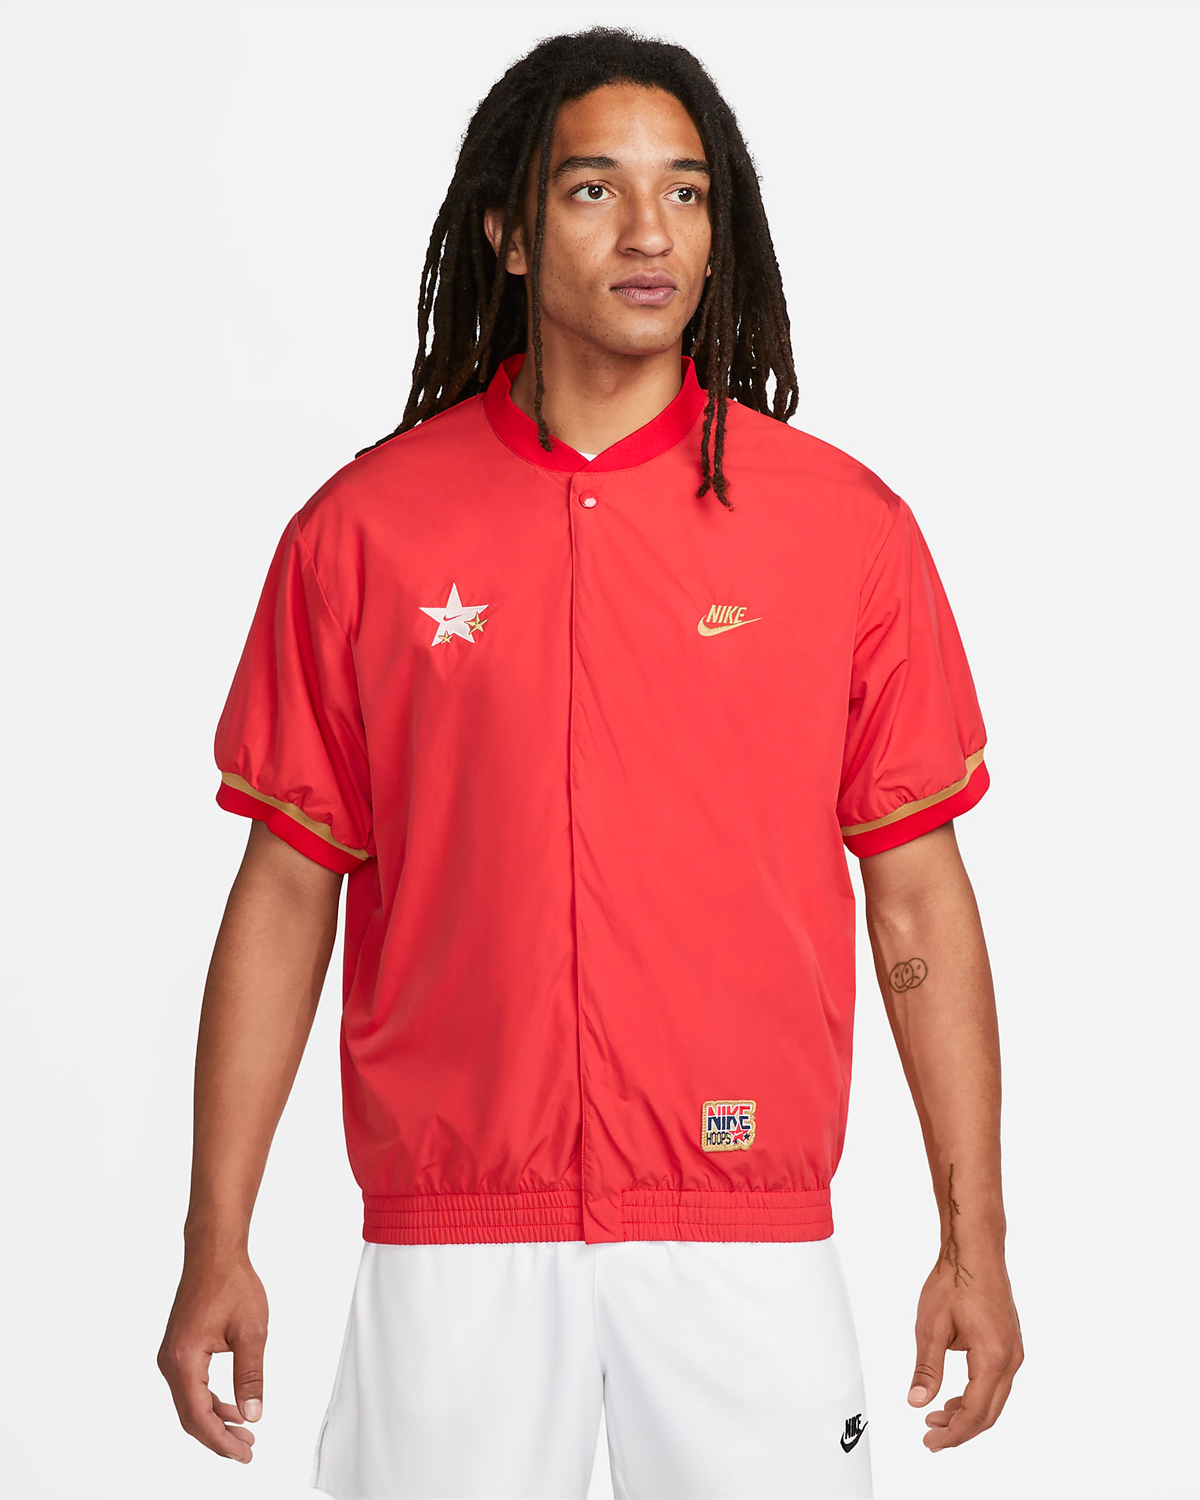 Nike-Authentics-Basketball-Warm-Up-Shirt-University-Red